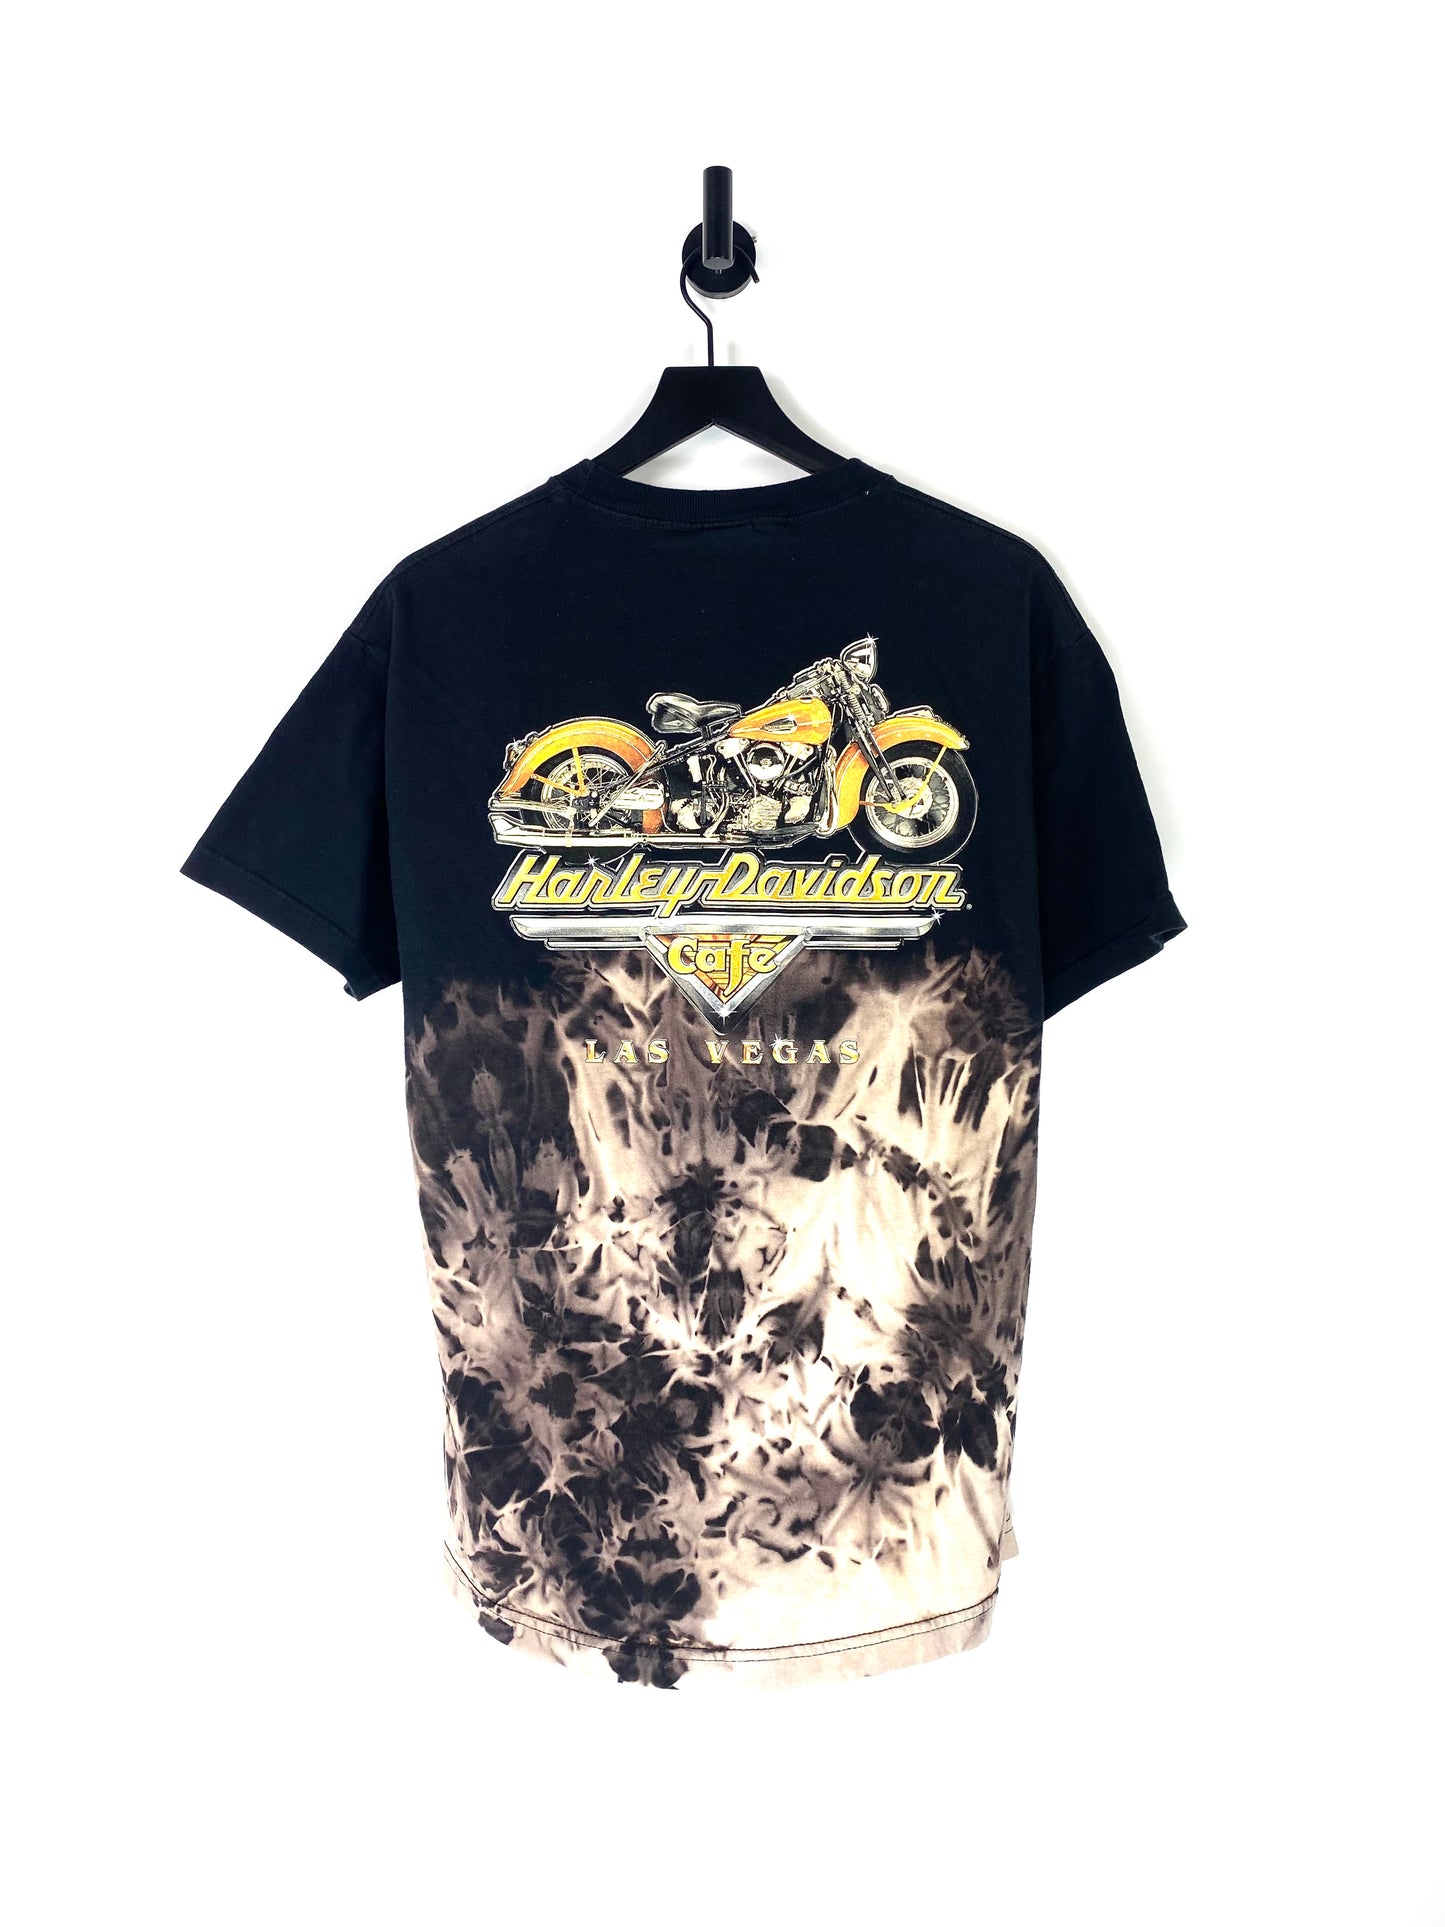 Harley Davidson Cafe T Shirt - L